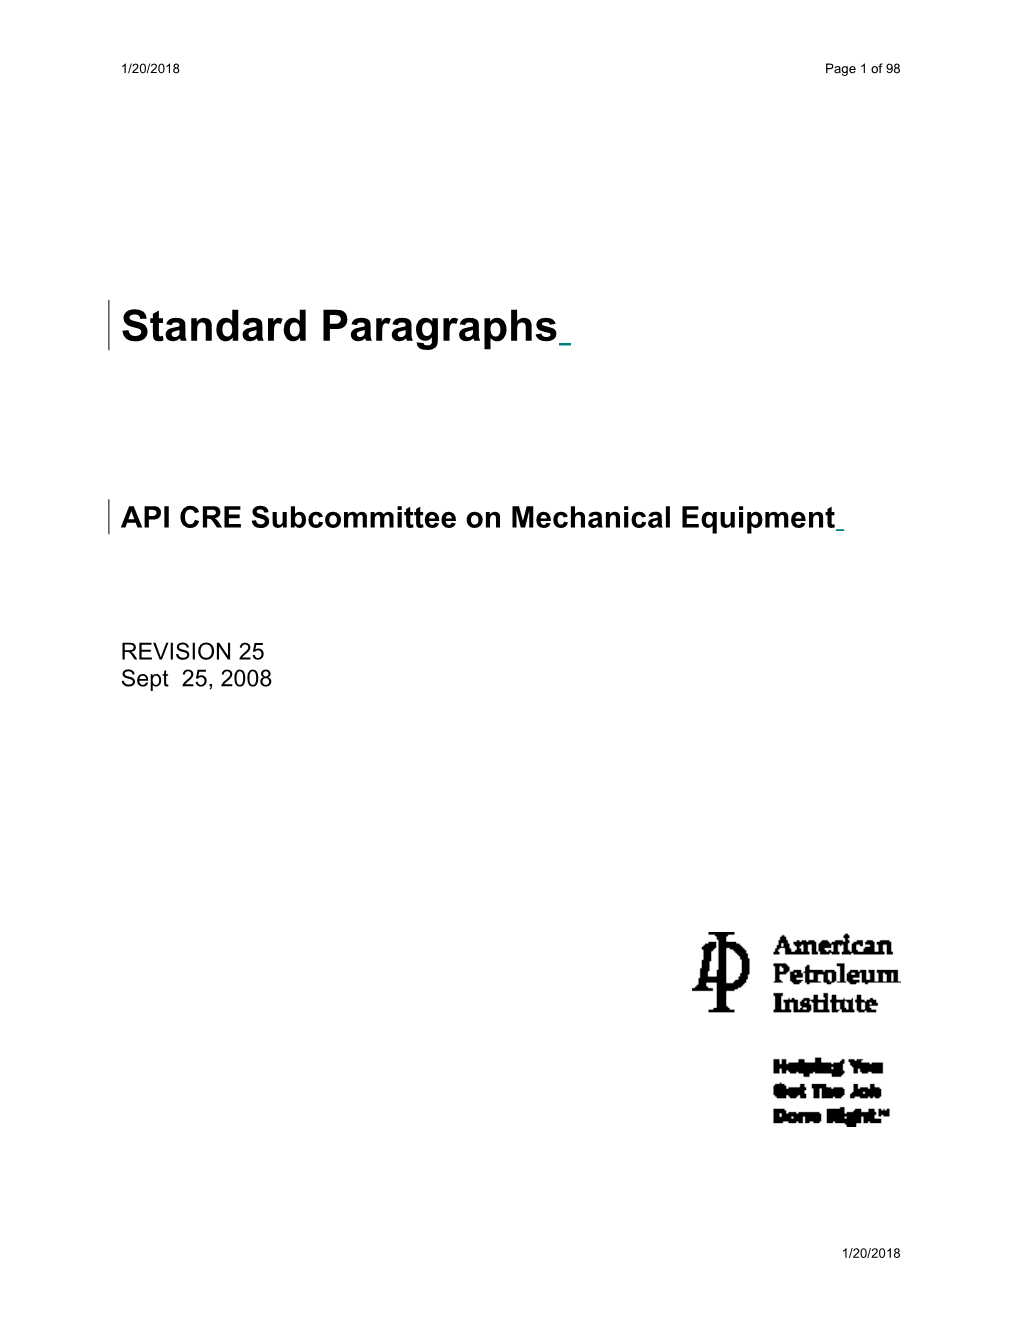 API CRE Subcommittee on Mechanical Equipment